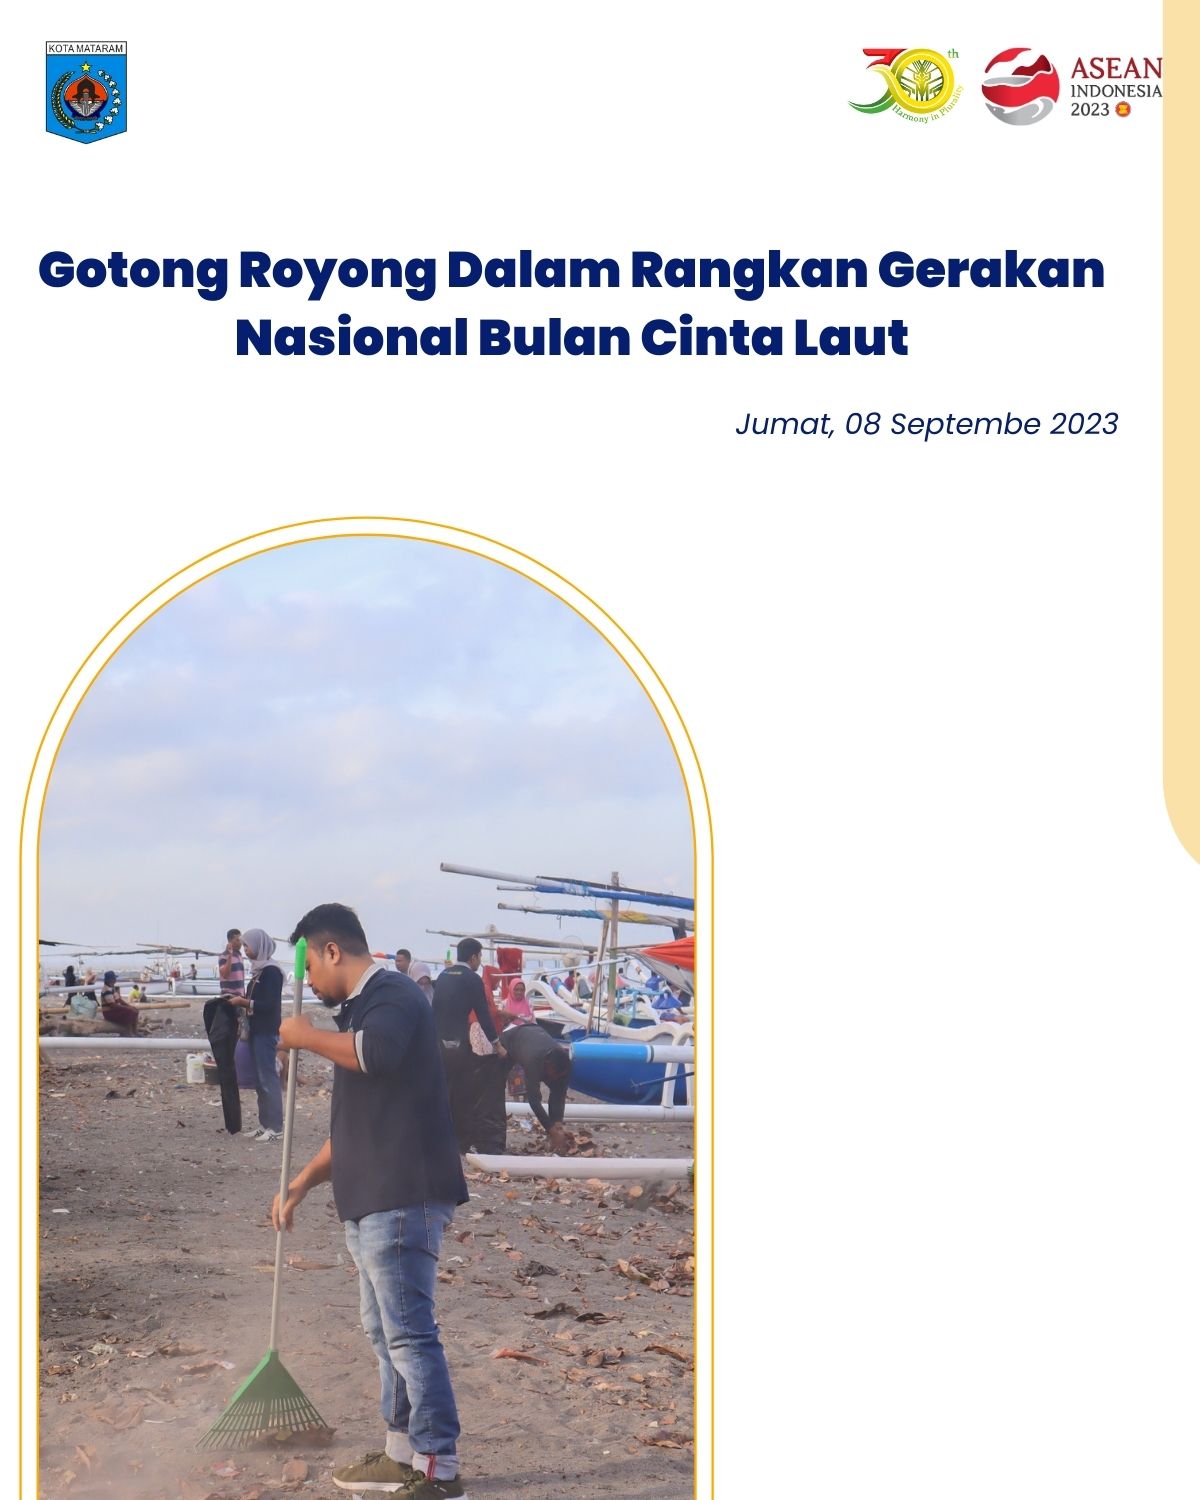 Gotong Royong Dalam Rangka Gerakan Nasional Bulan Cinta Laut